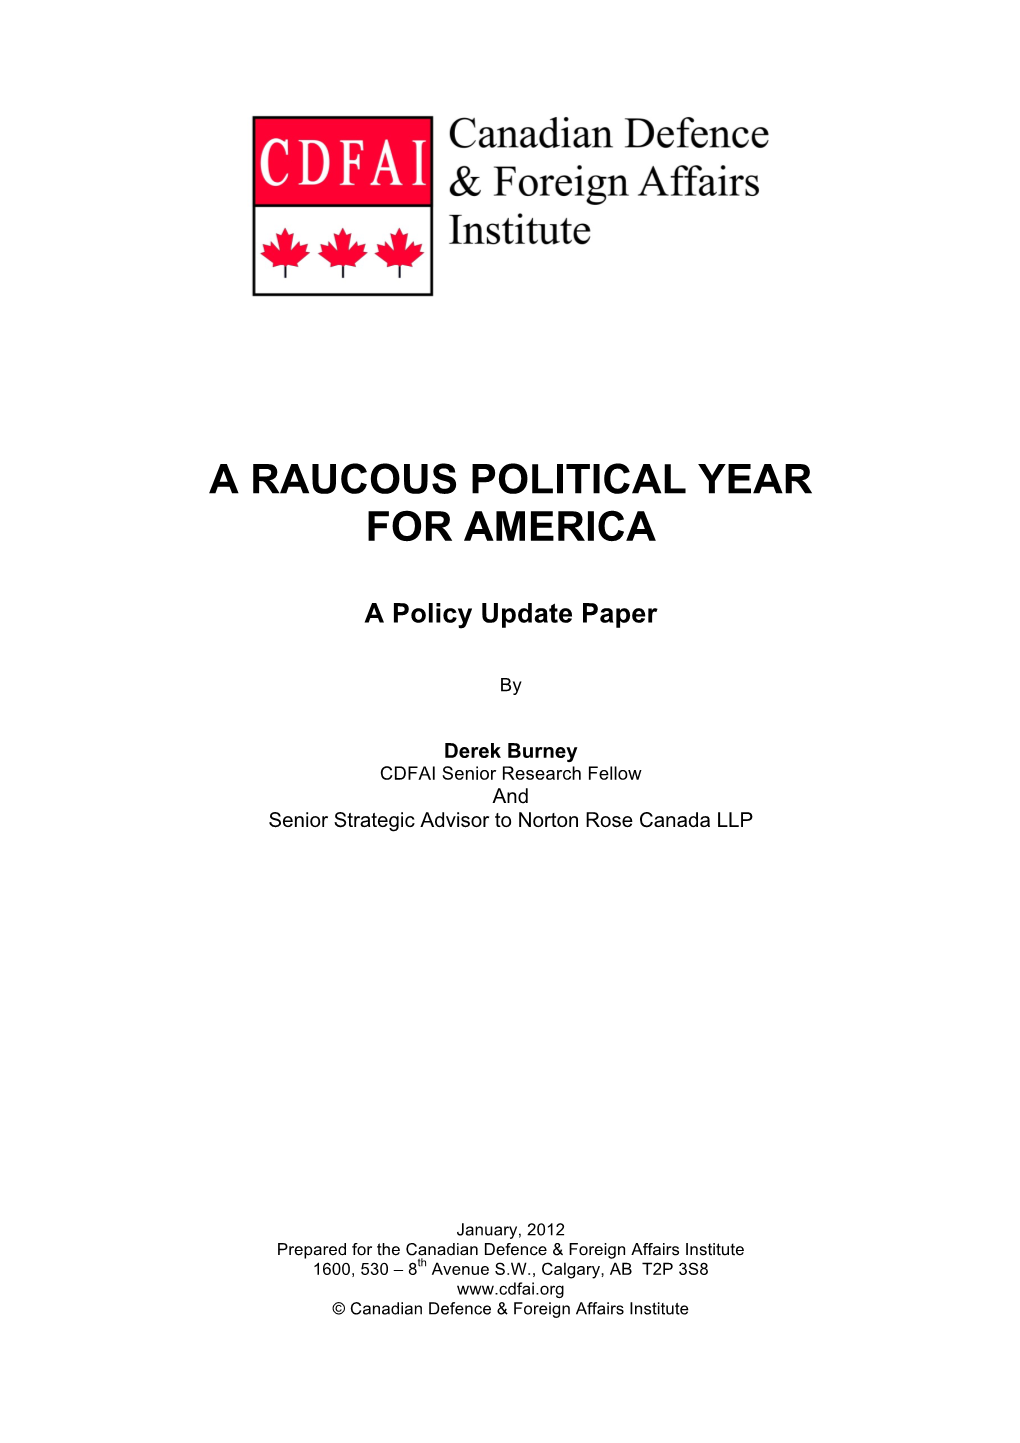 A Raucous Political Year for America